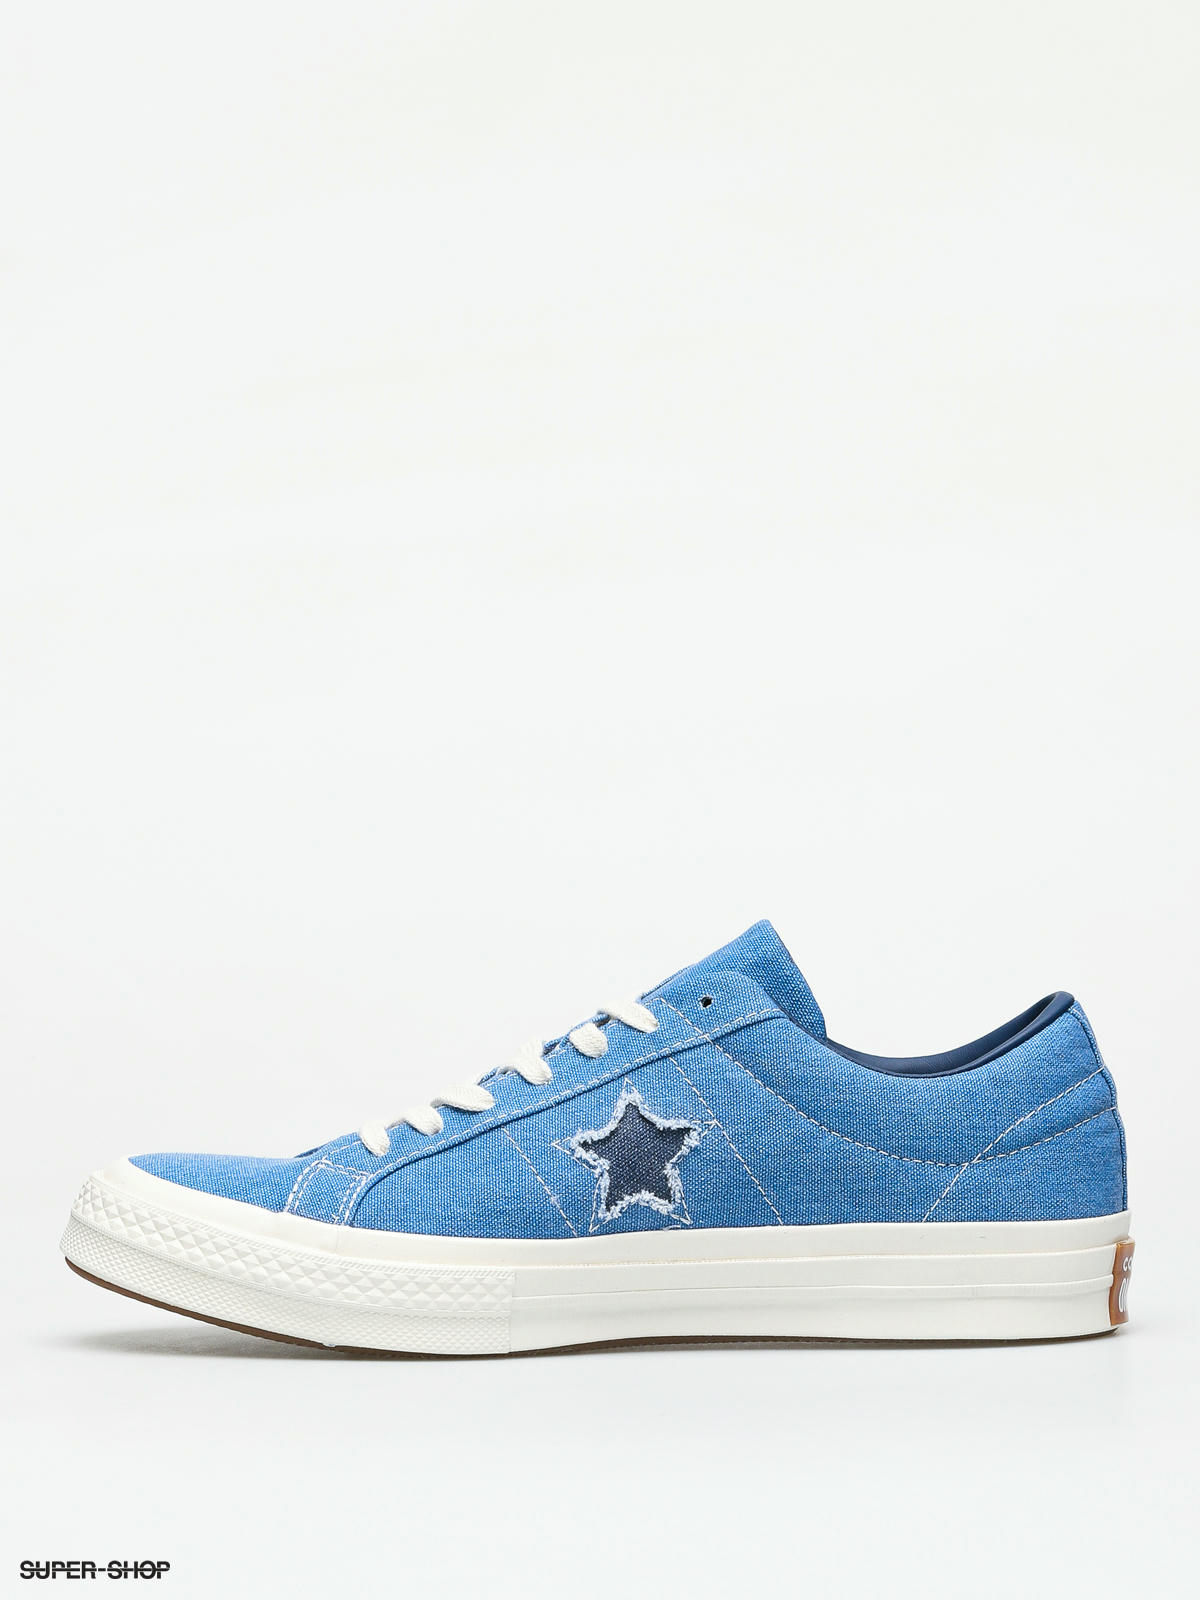 converse one star ox navy blue